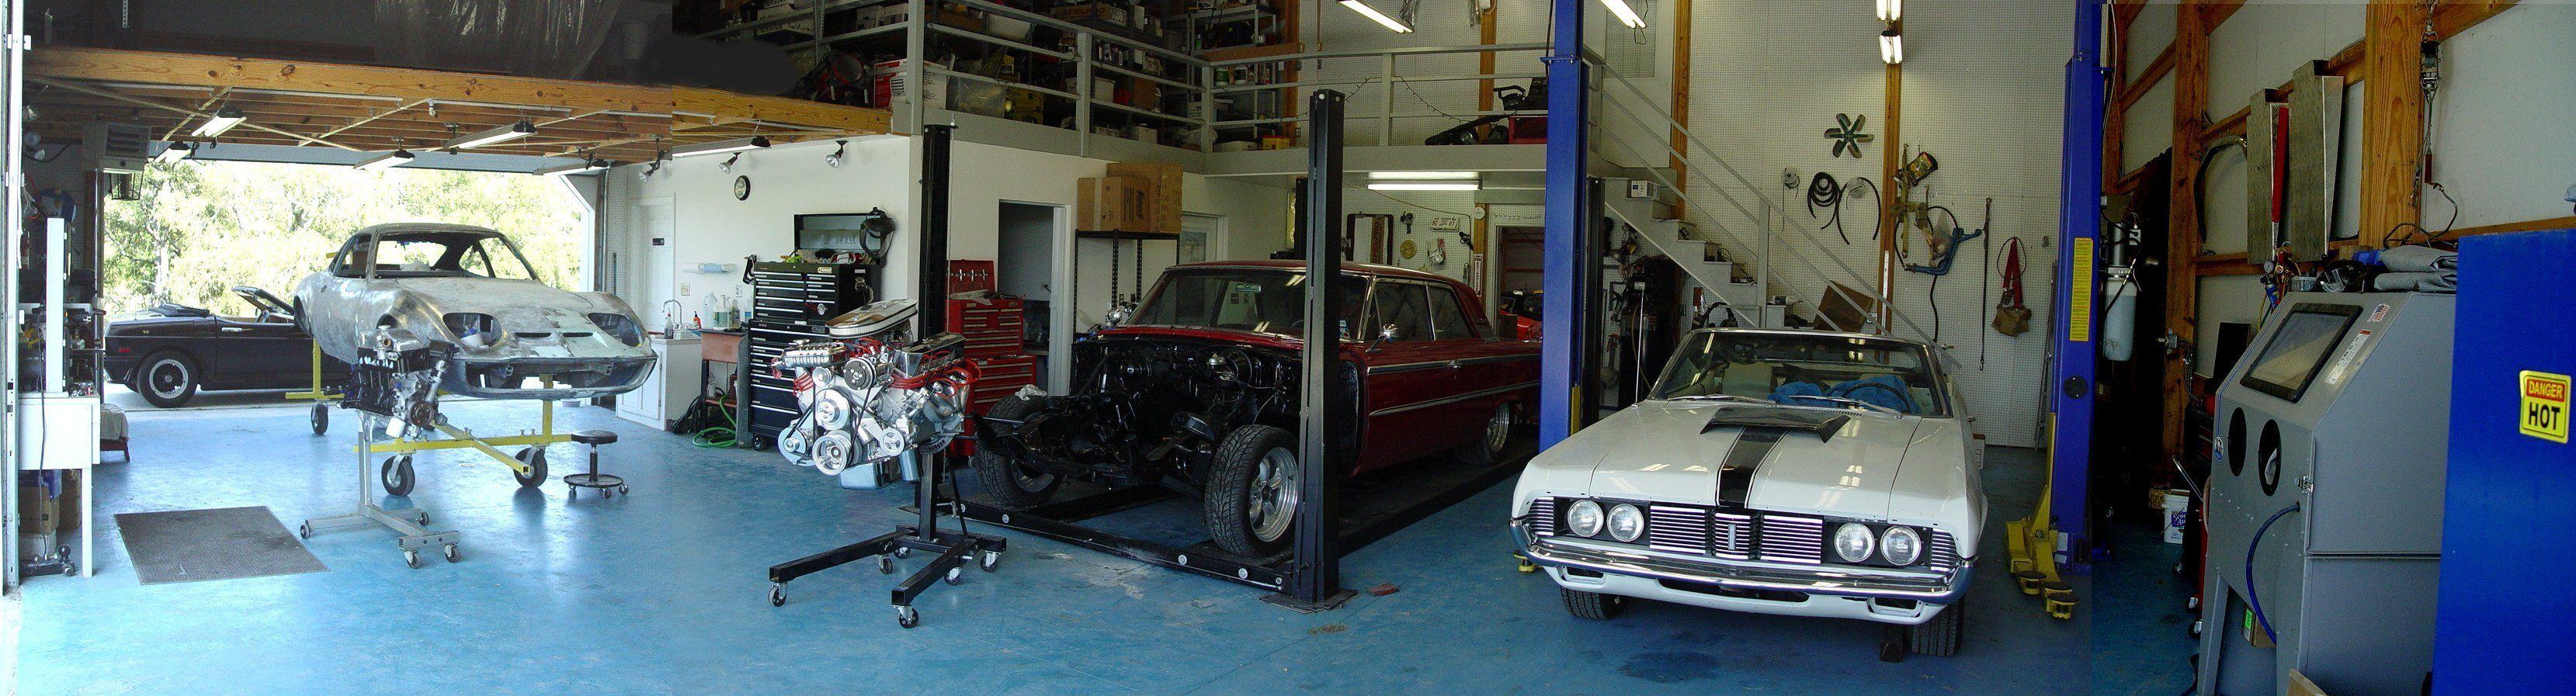 Classic Auto Repair Logo - Midlife Classics - Classic Car Restoration, Service and Support ...